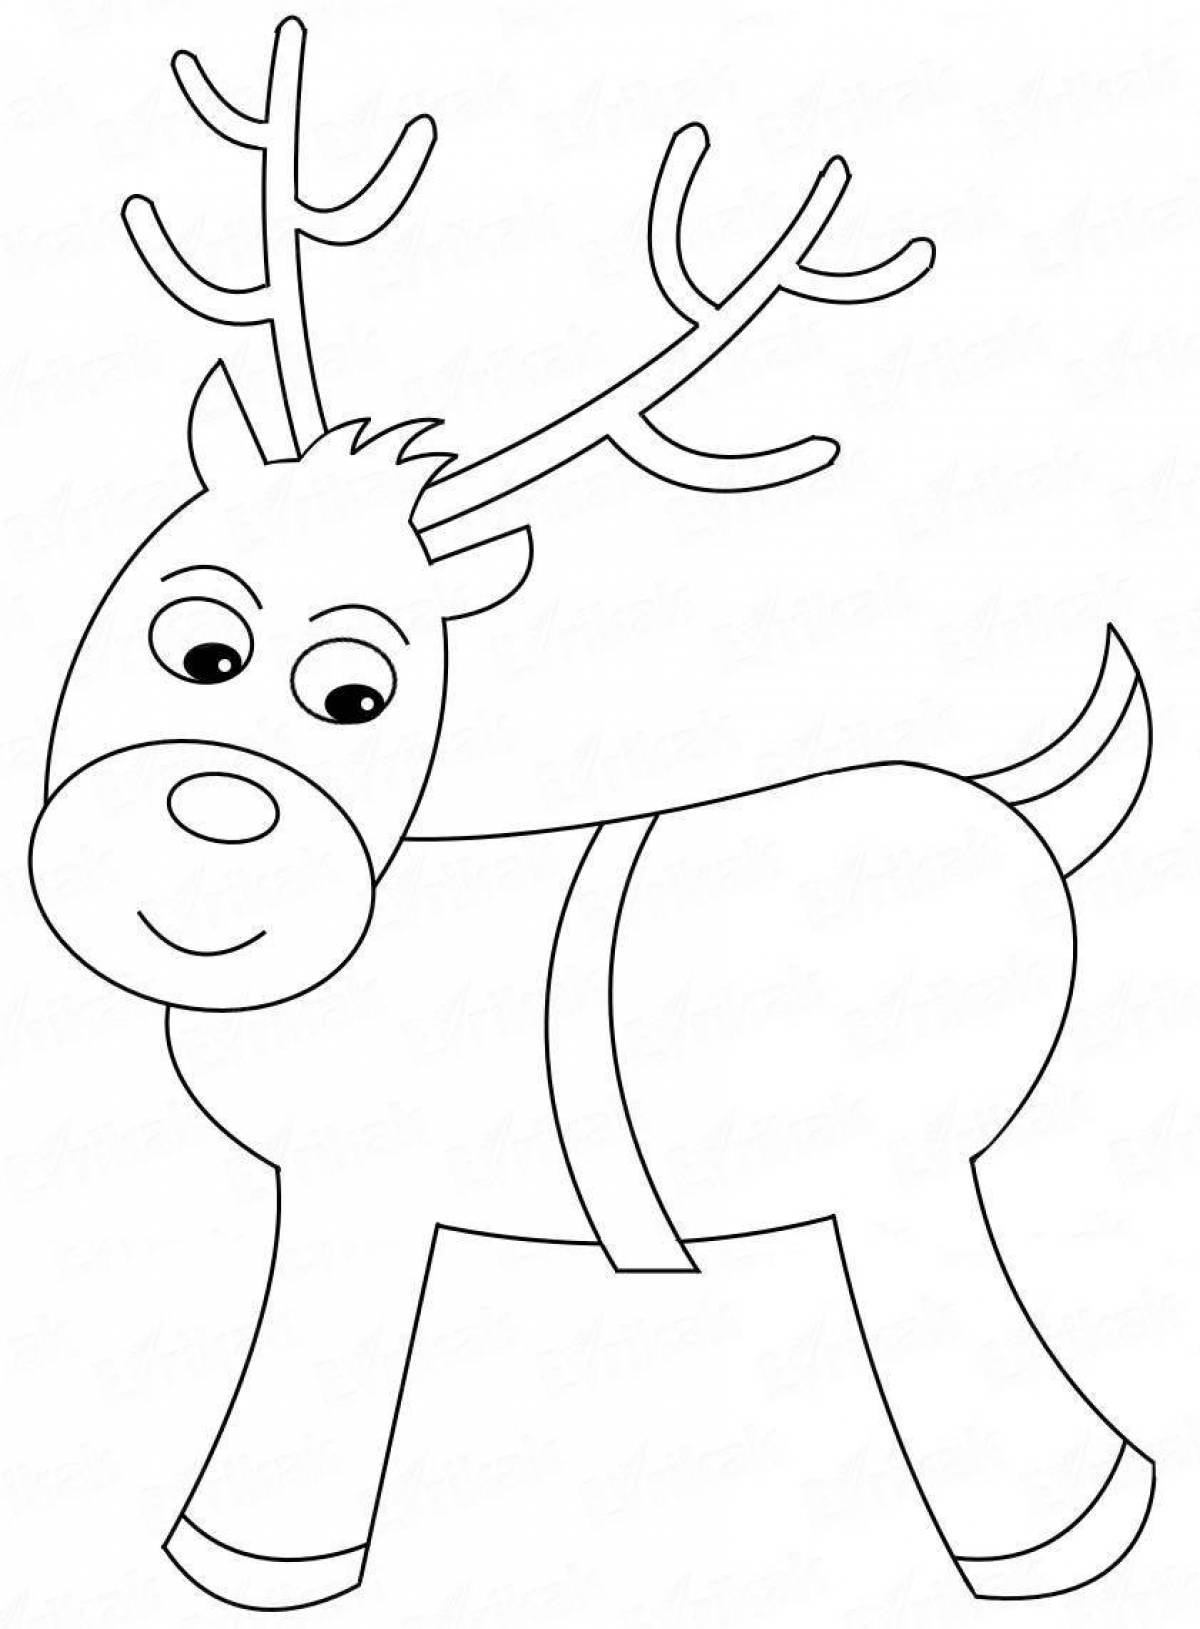 Shiny Christmas reindeer